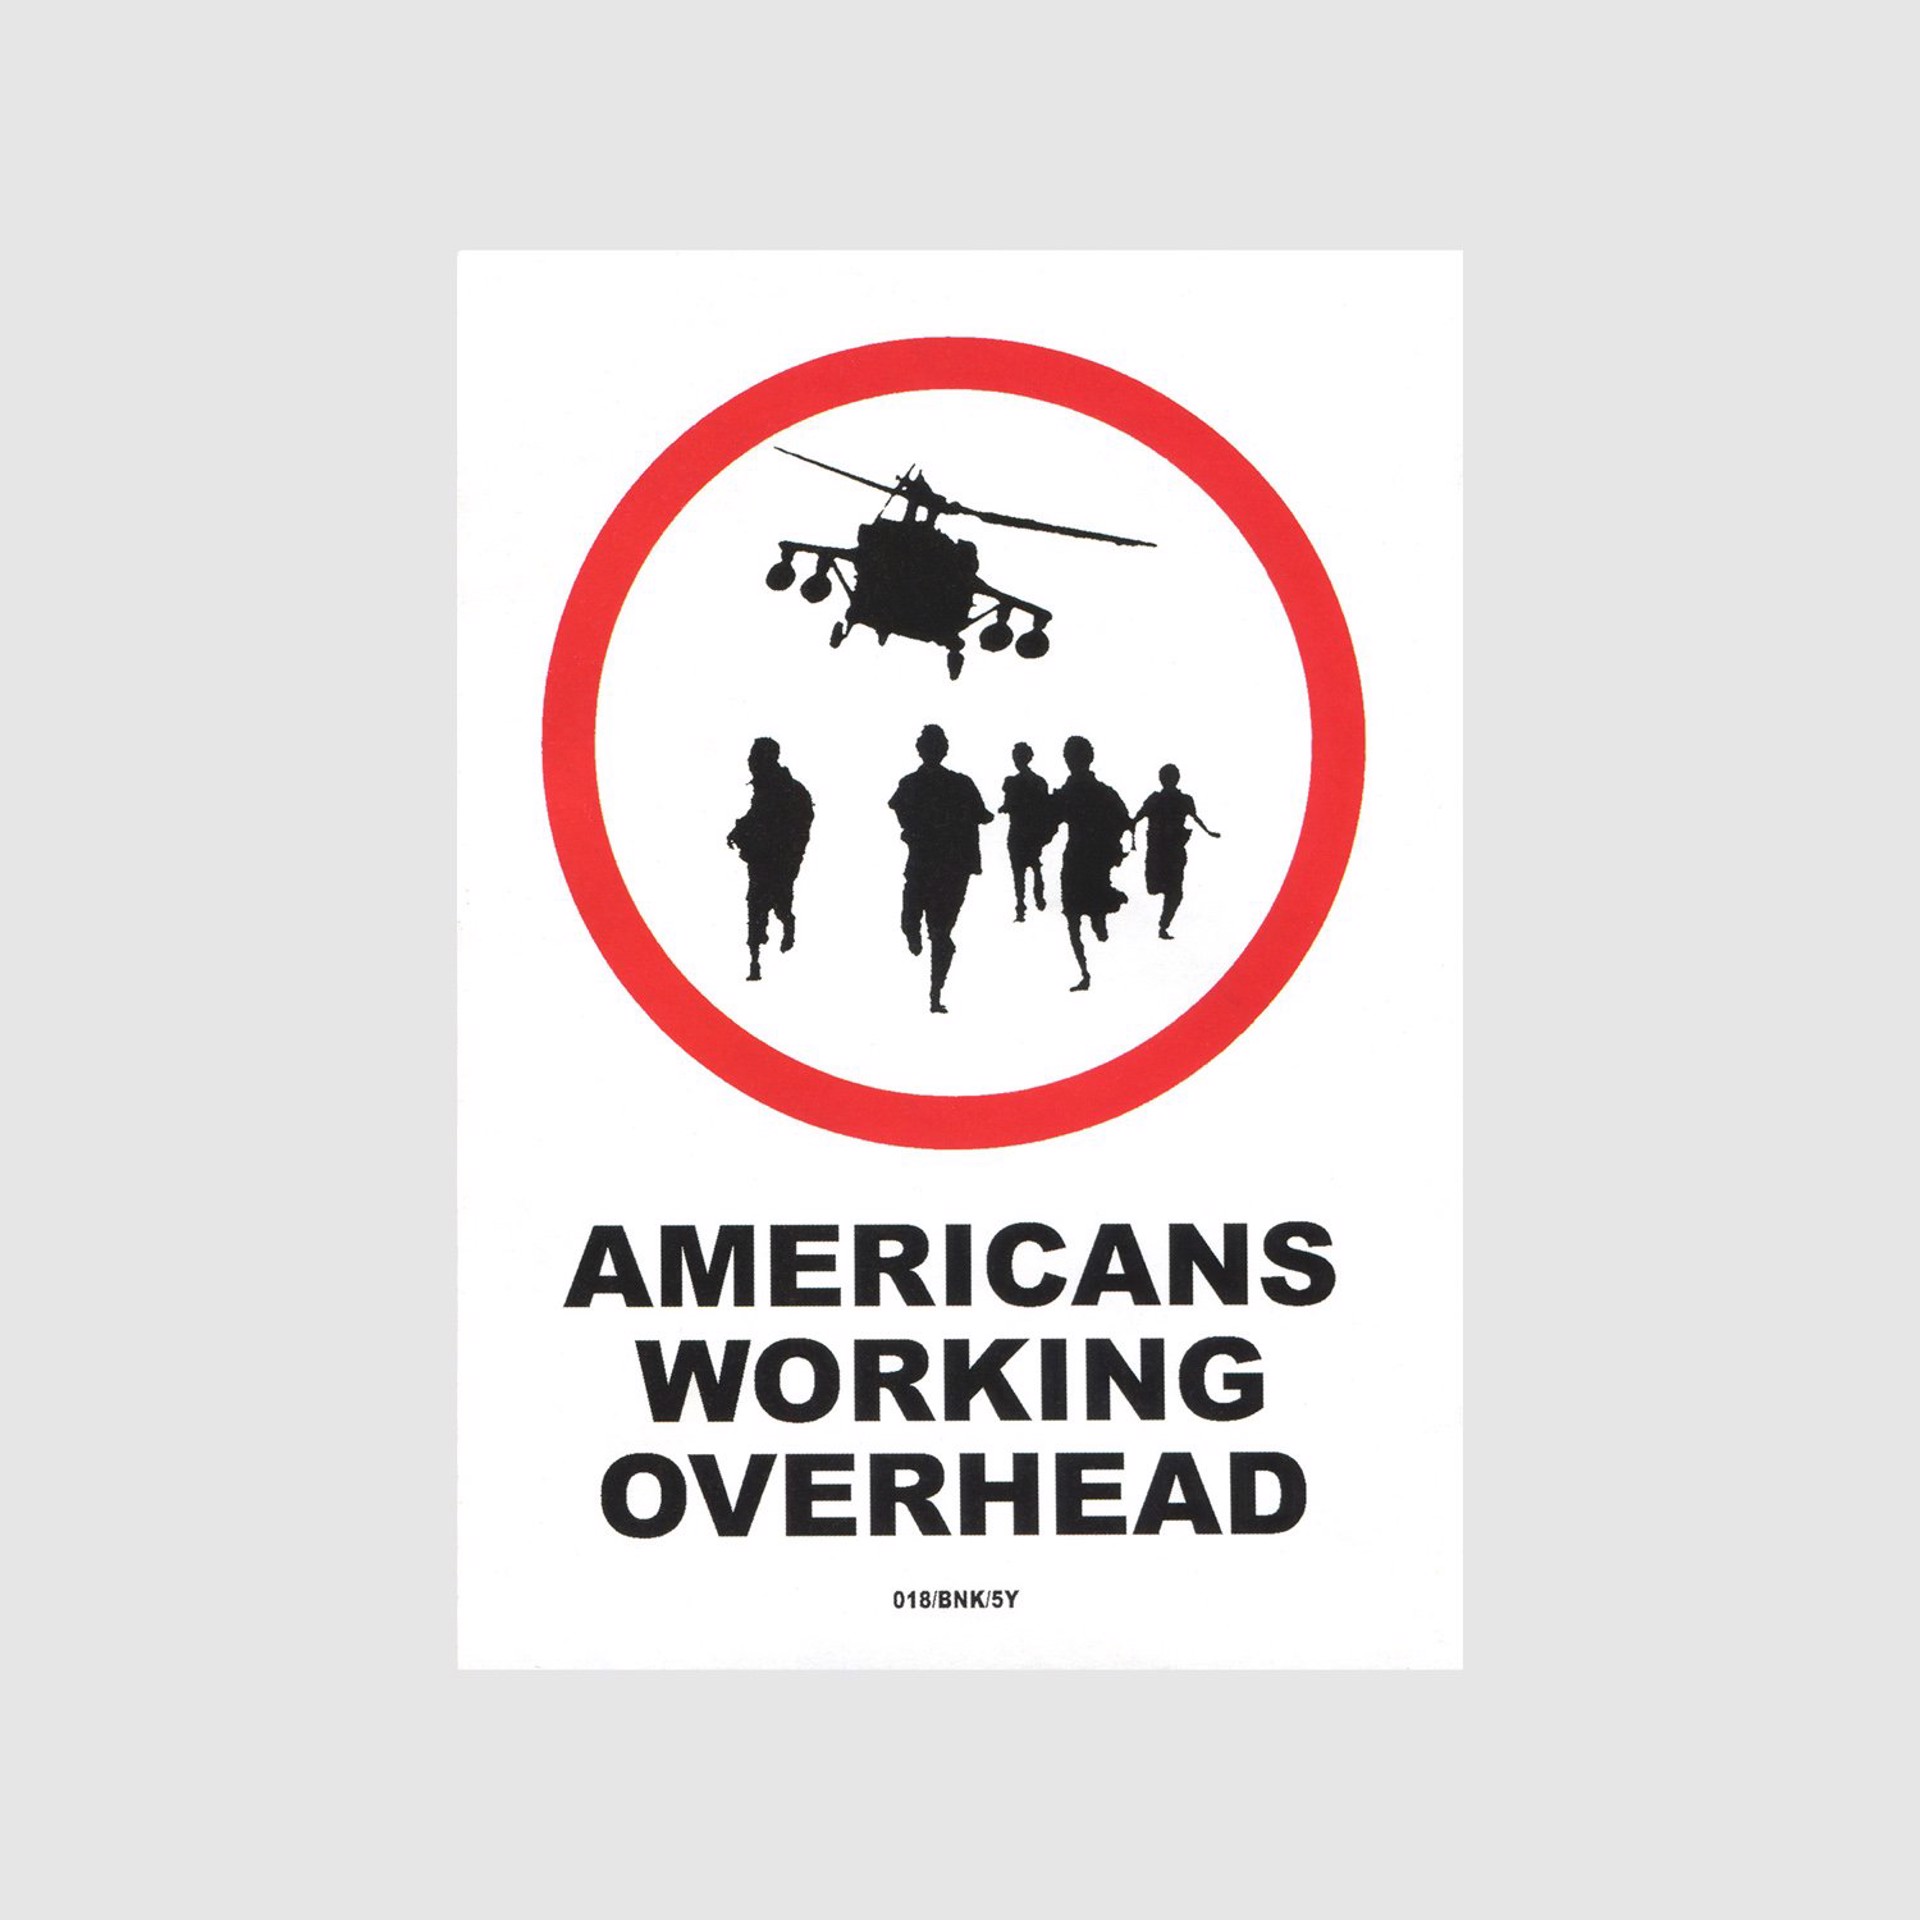 Americans Working Overhead 018/BNK/5Y by Banksy